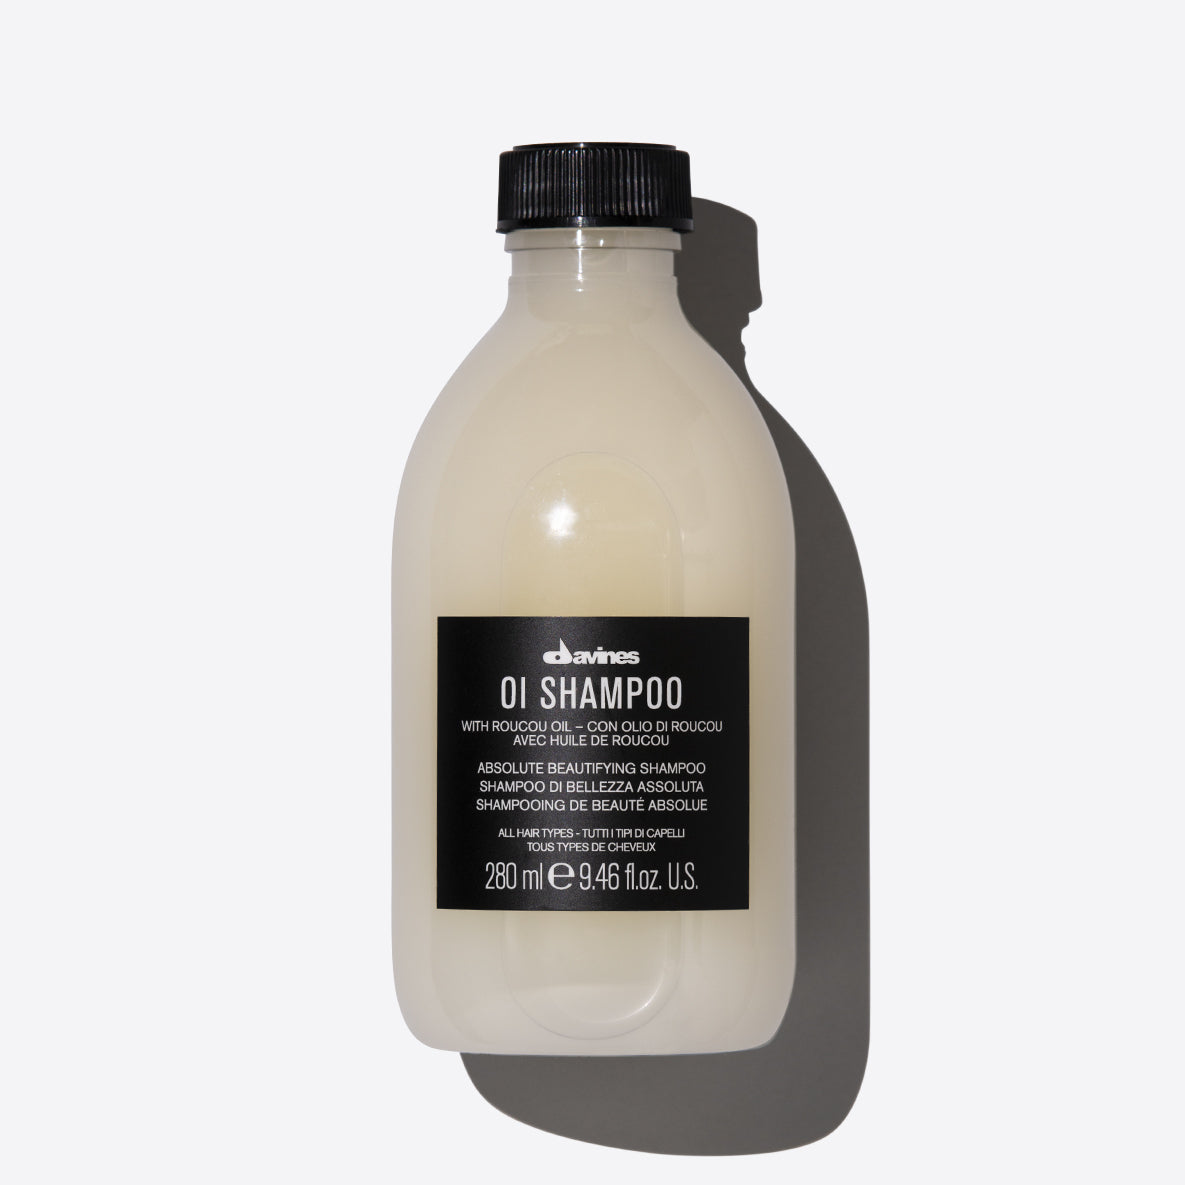 OI Shampoo 1  90 mlDavines
